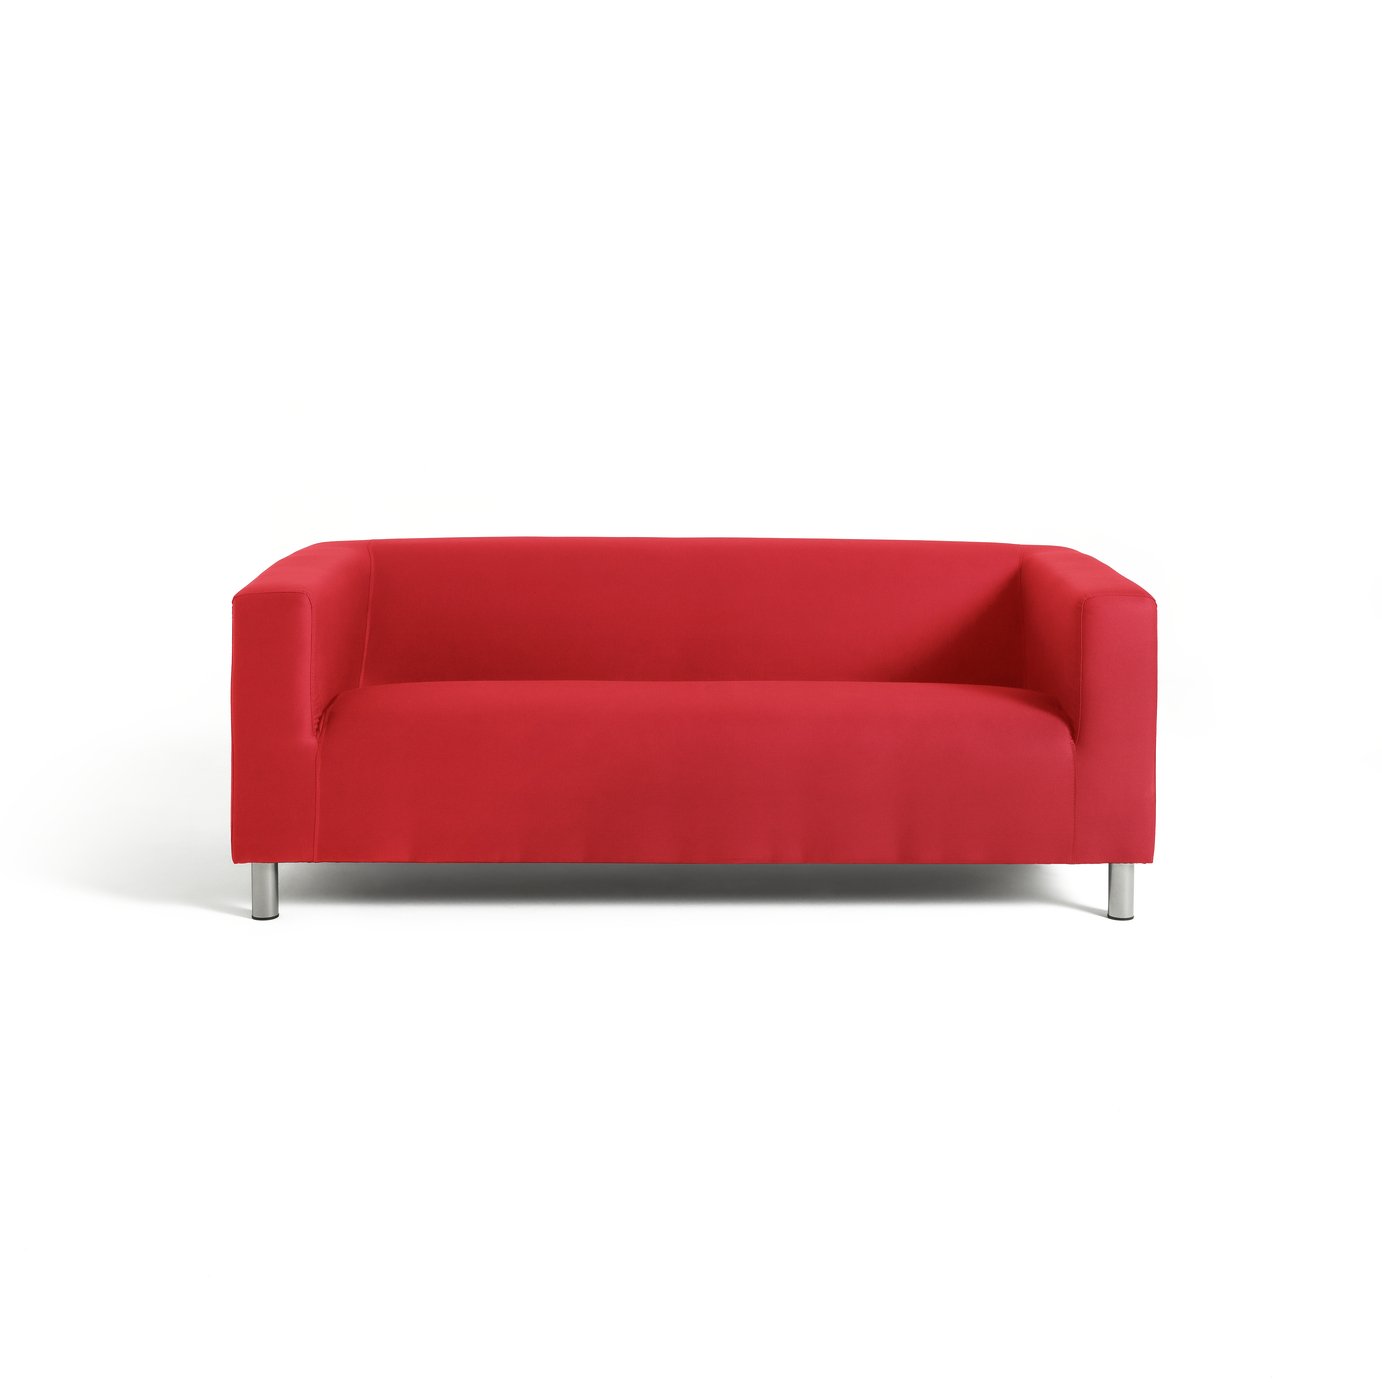 Argos Home Moda 3 Seater Fabric Sofa - Red